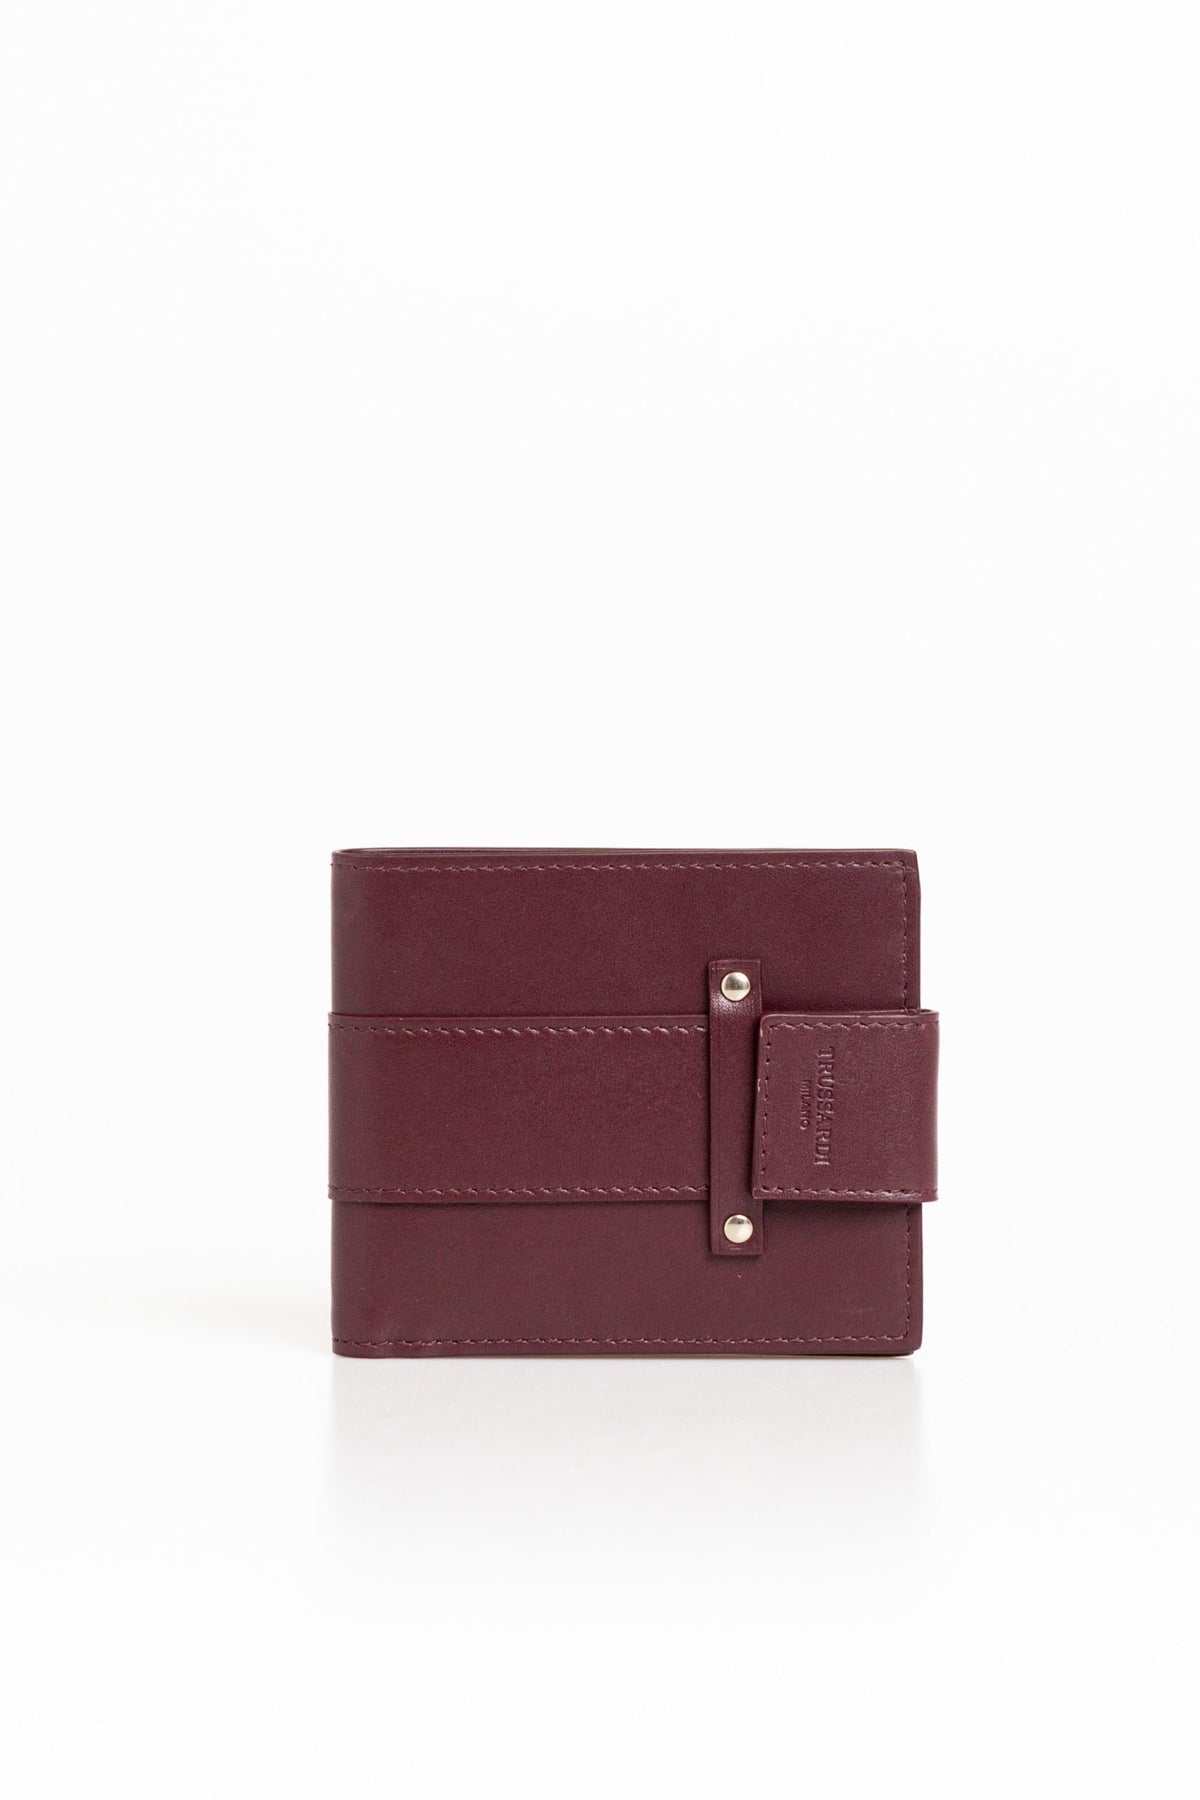 Trussardi Pocket Wallet In Soft Calfskin